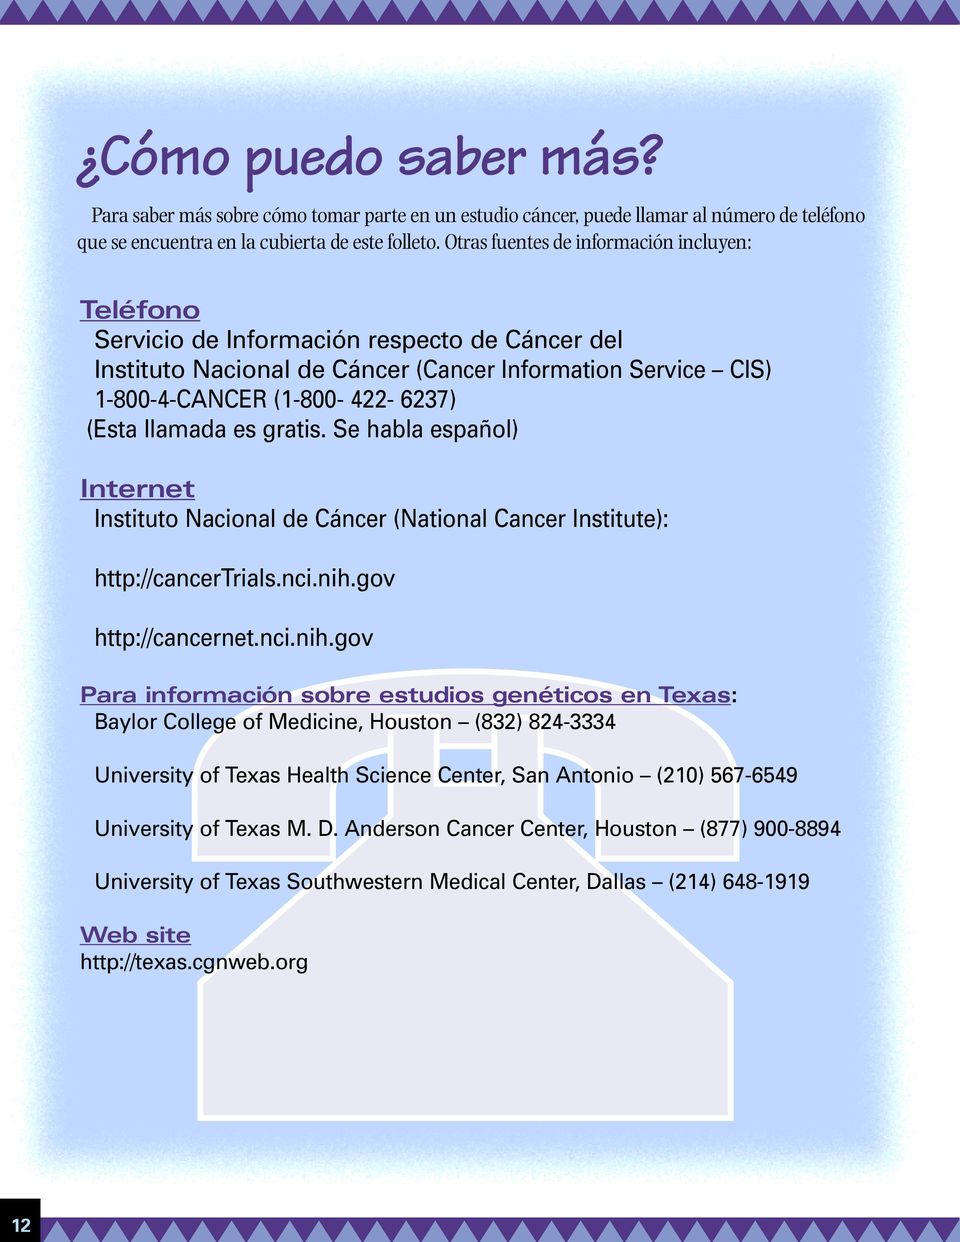 llamada es gratis. Se habla español) Internet Instituto Nacional de Cáncer (National Cancer Institute): http://cancertrials.nci.nih.